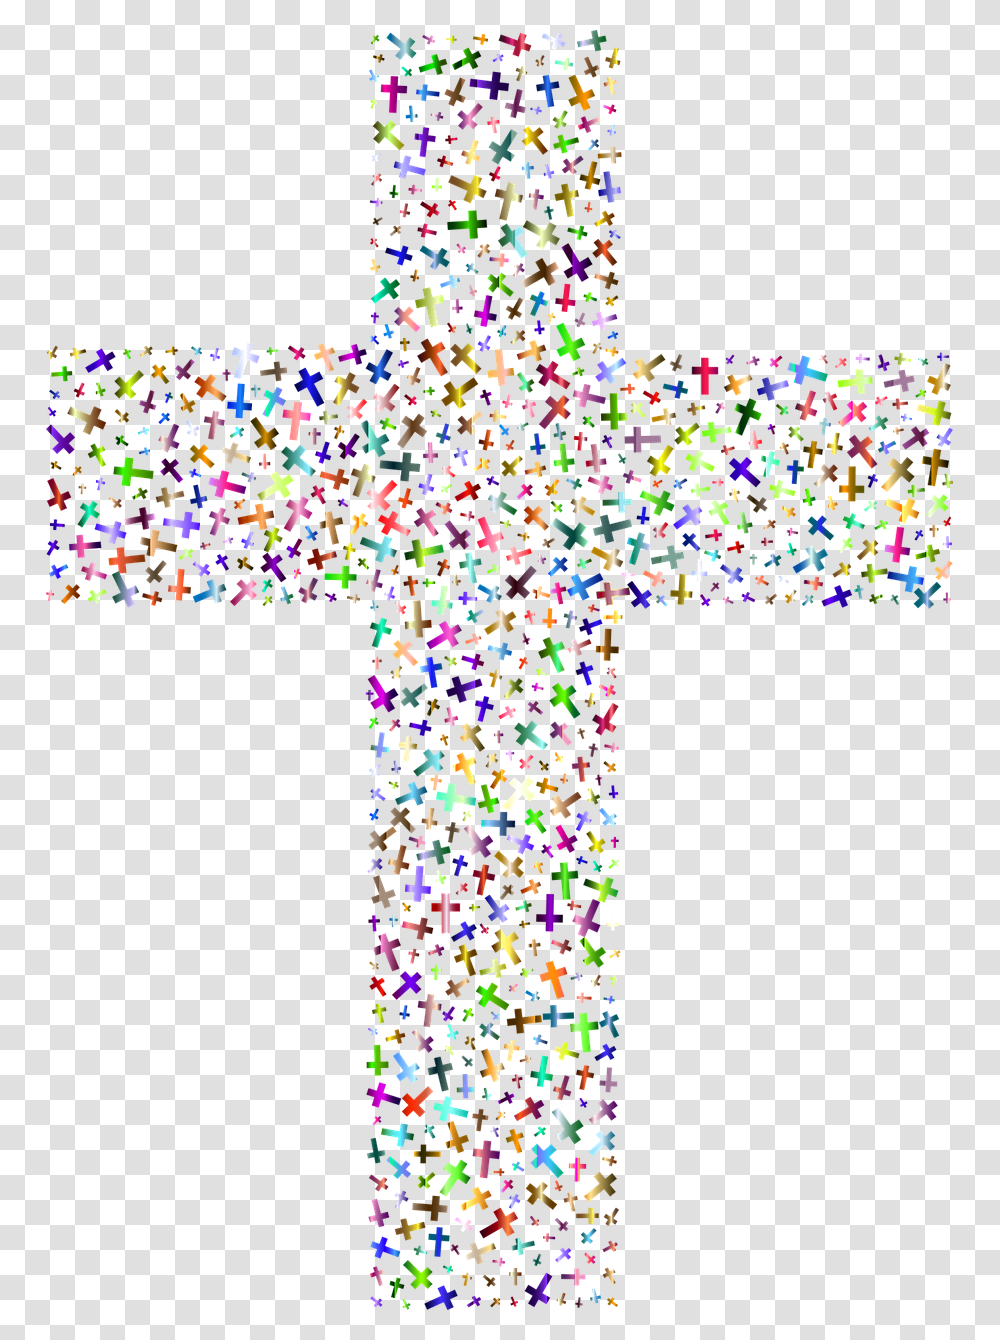 Jesus Christ Cross Crucifix Image Colourful Cross Clipart, Confetti, Paper Transparent Png